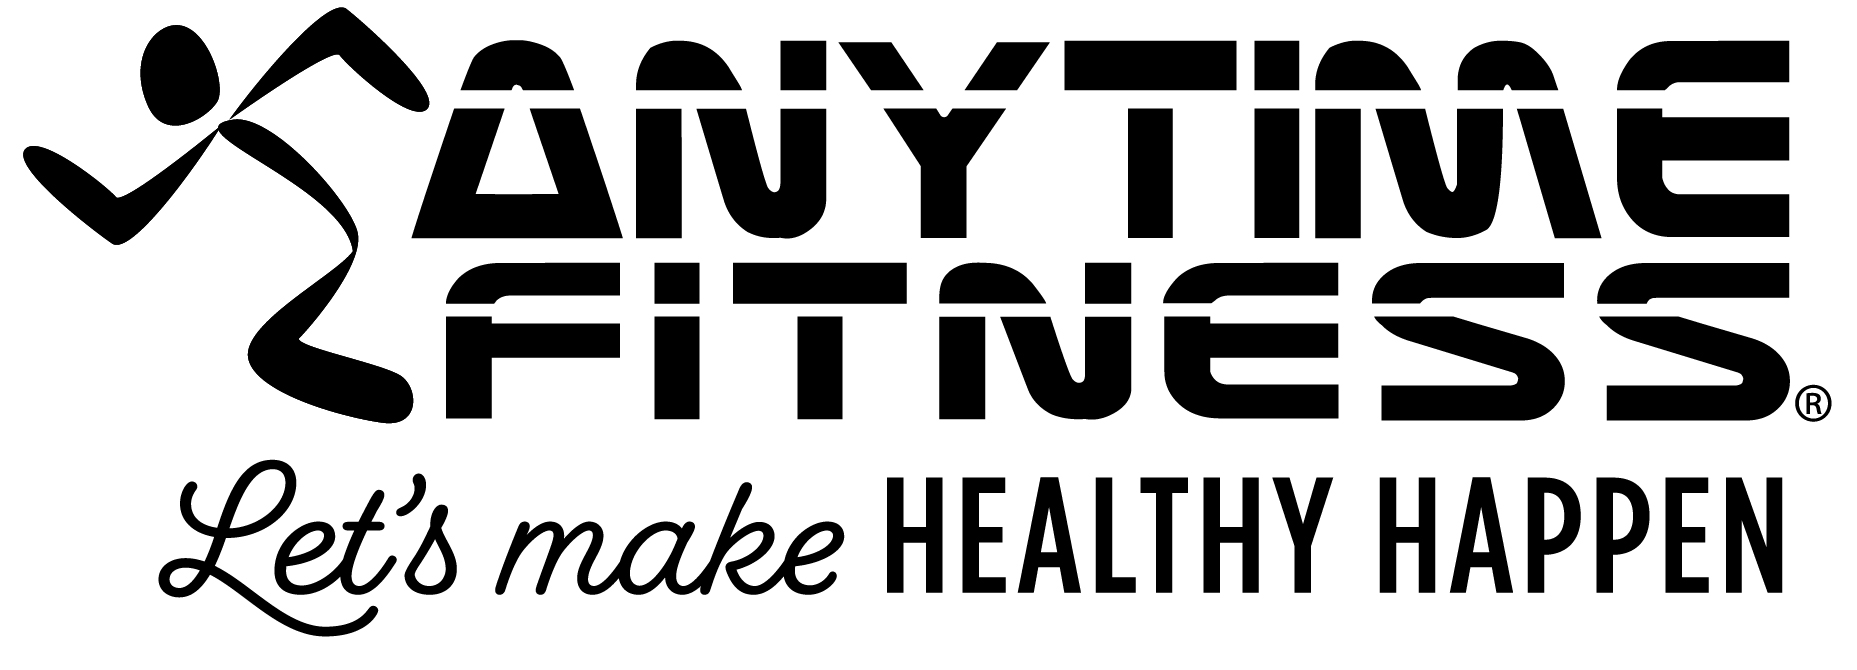 Anytime Fitness Club Refresh Checklist